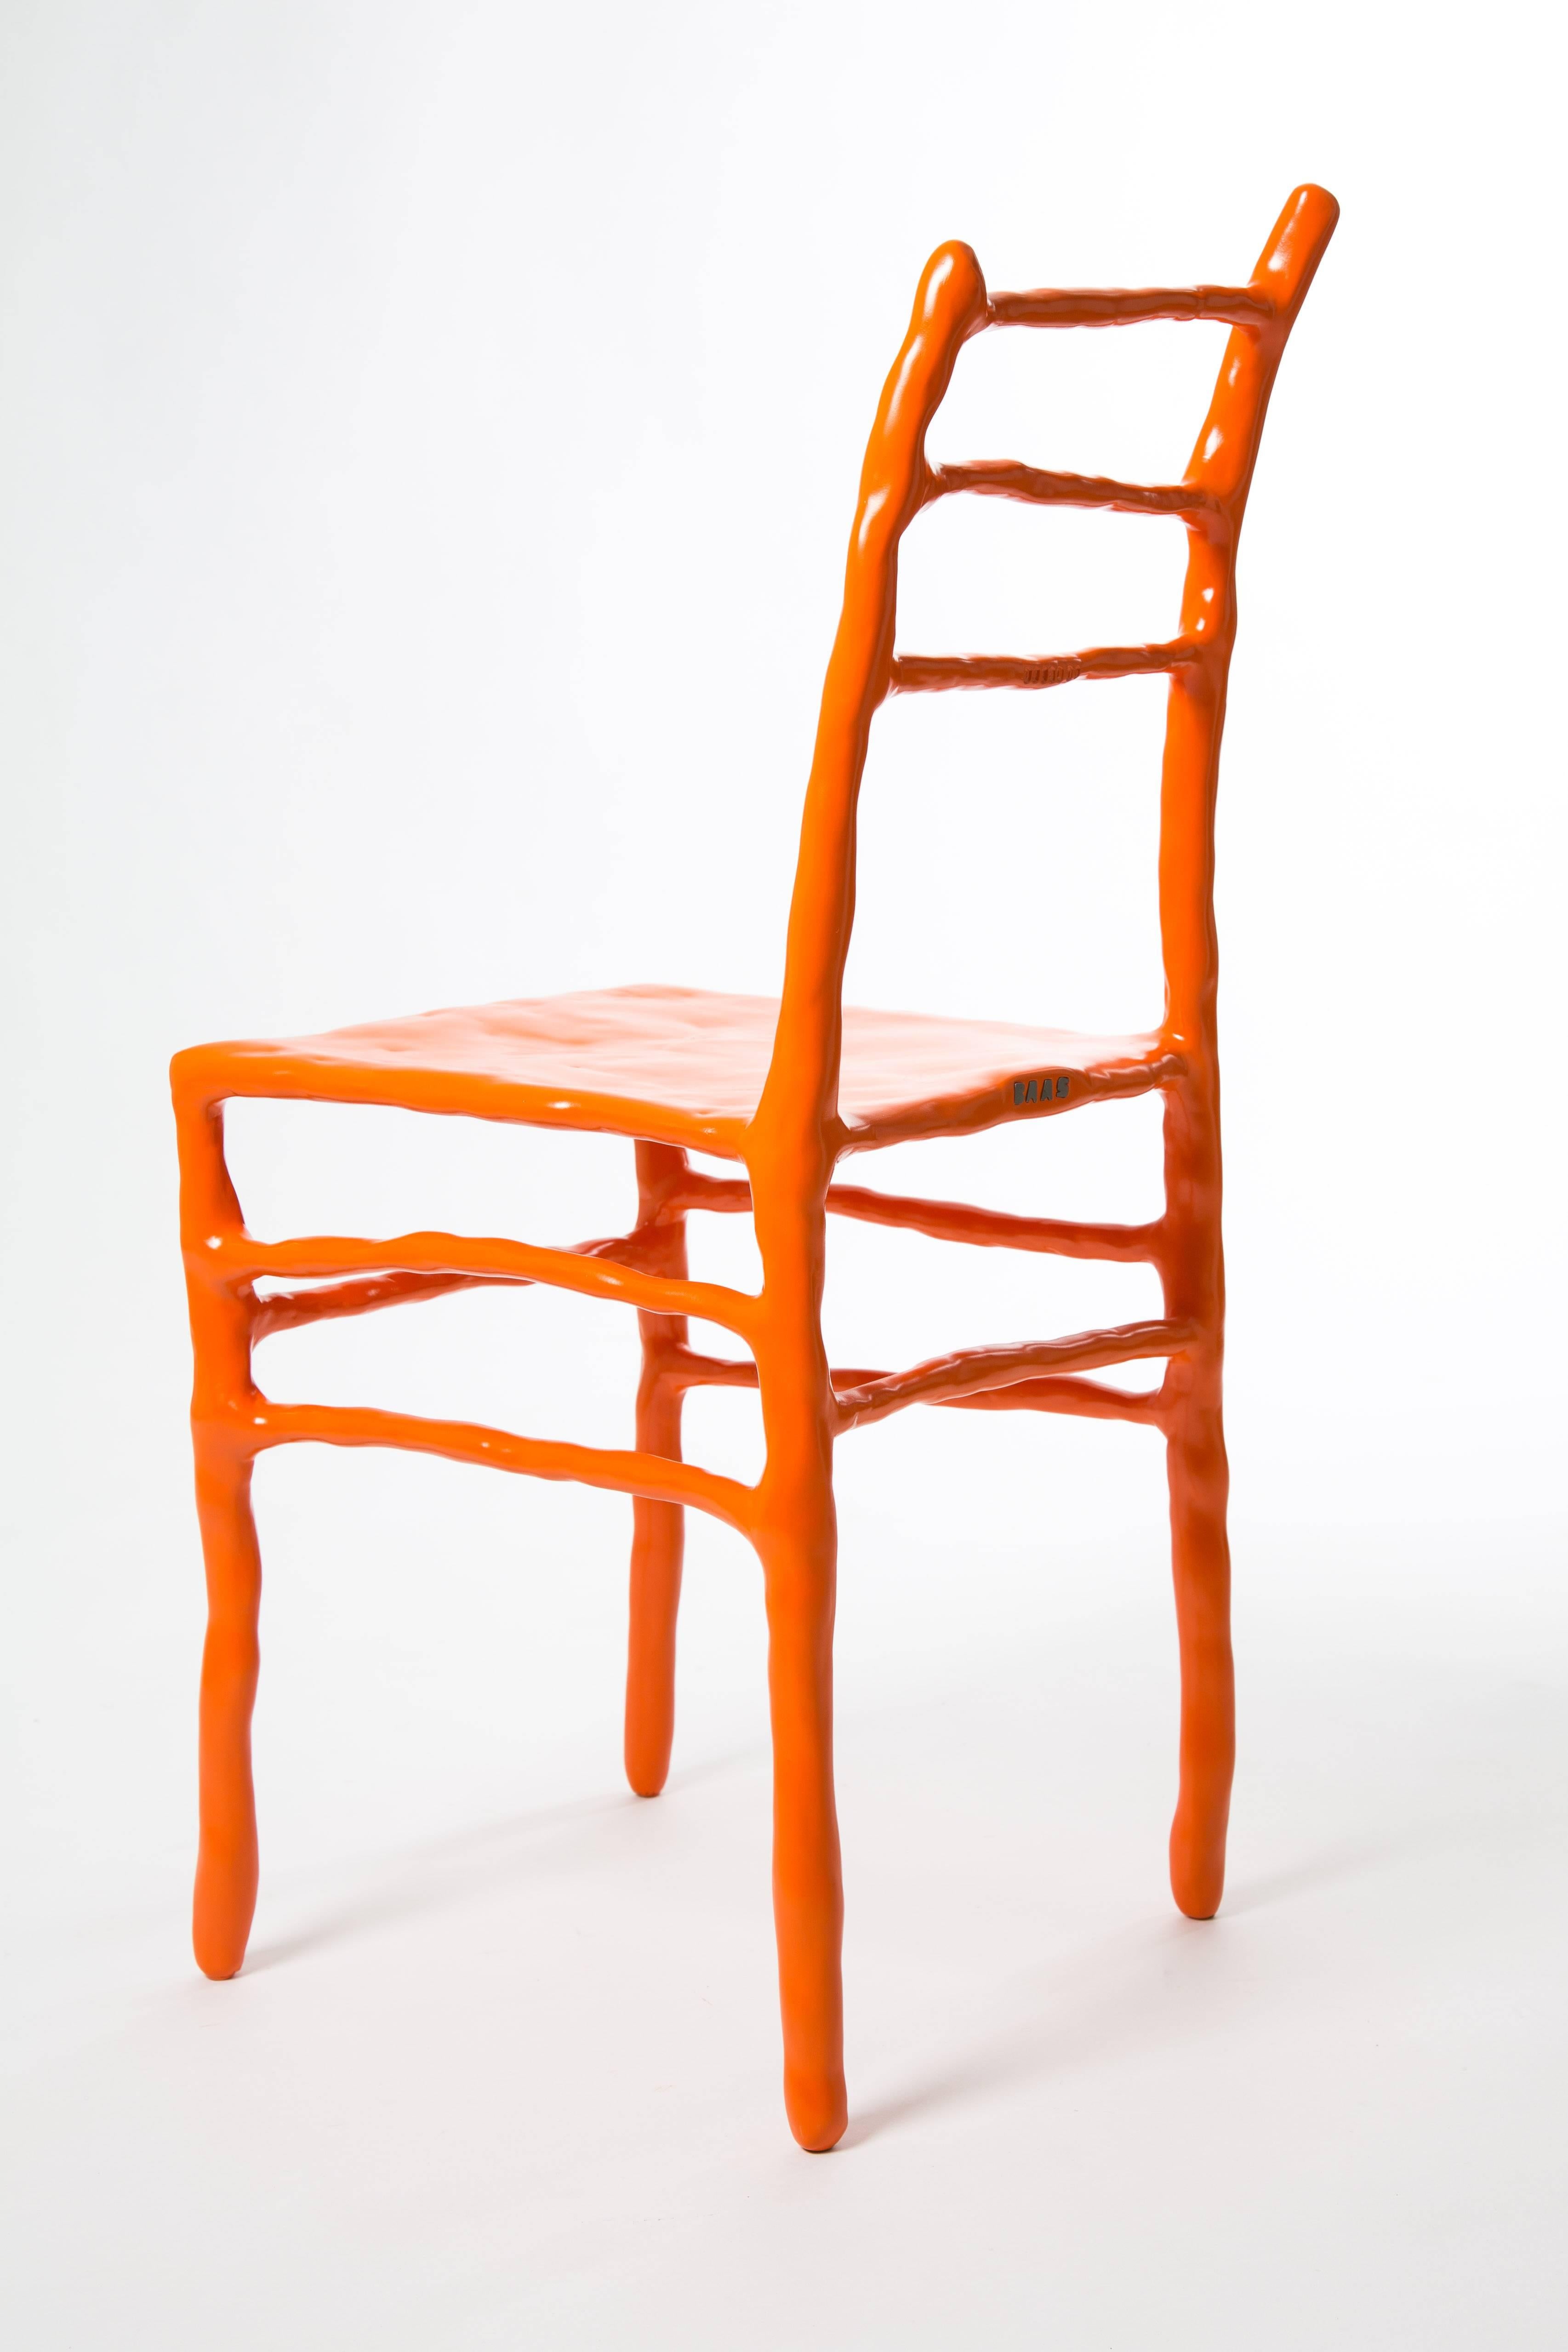 Maarten Baas Clay Chair Limited Edition Basel Chair 2007 Orange For Sale 2